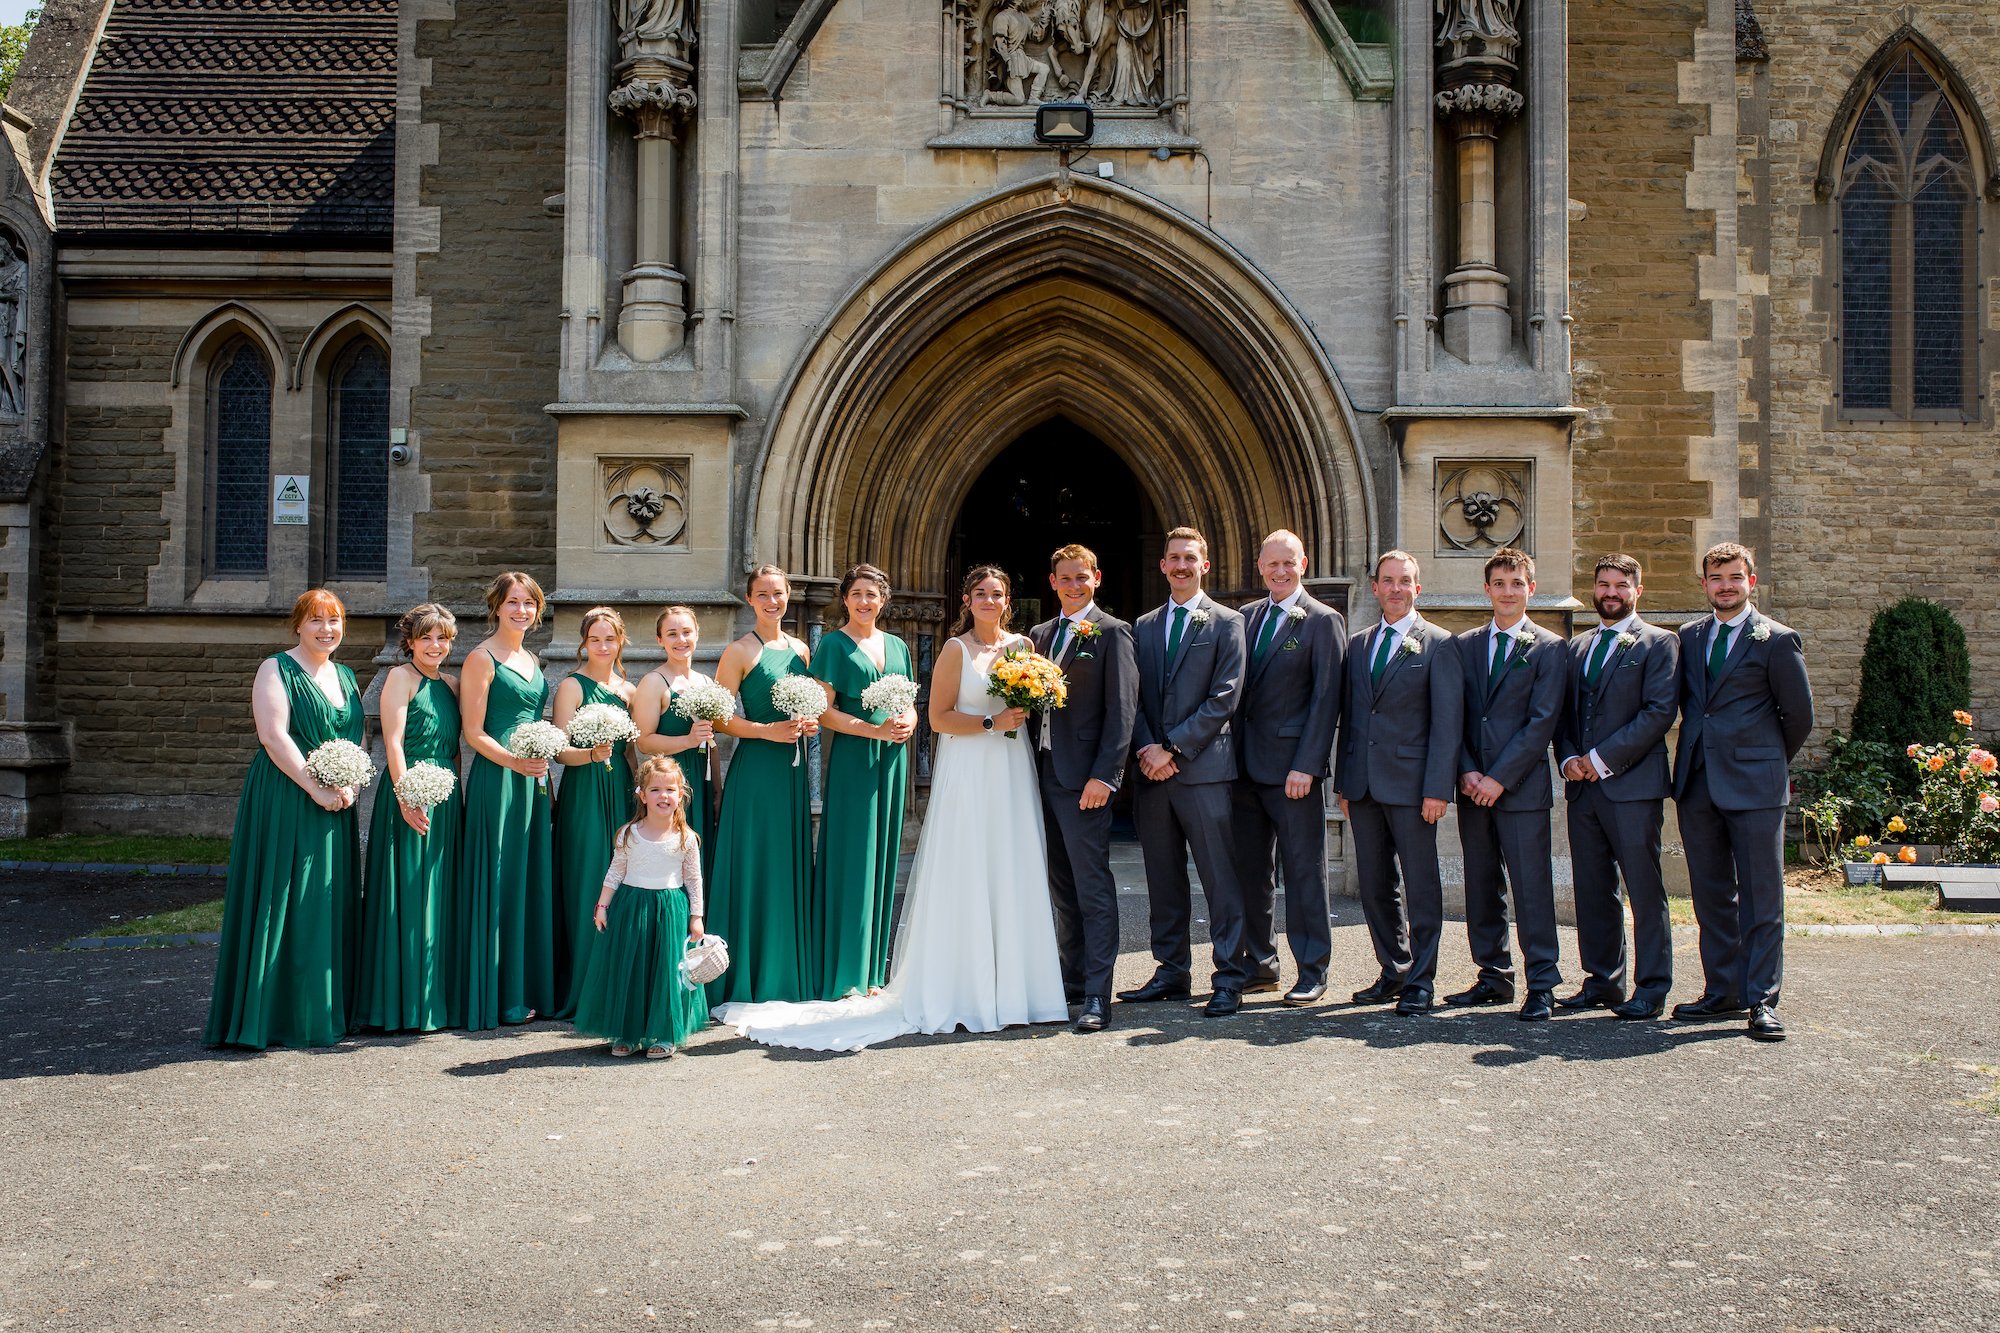 Skylark Wedding Venue - Warwickshire Wedding Venue Wedding Ceremony - Wedding Photographer By Emma Lowe Photography